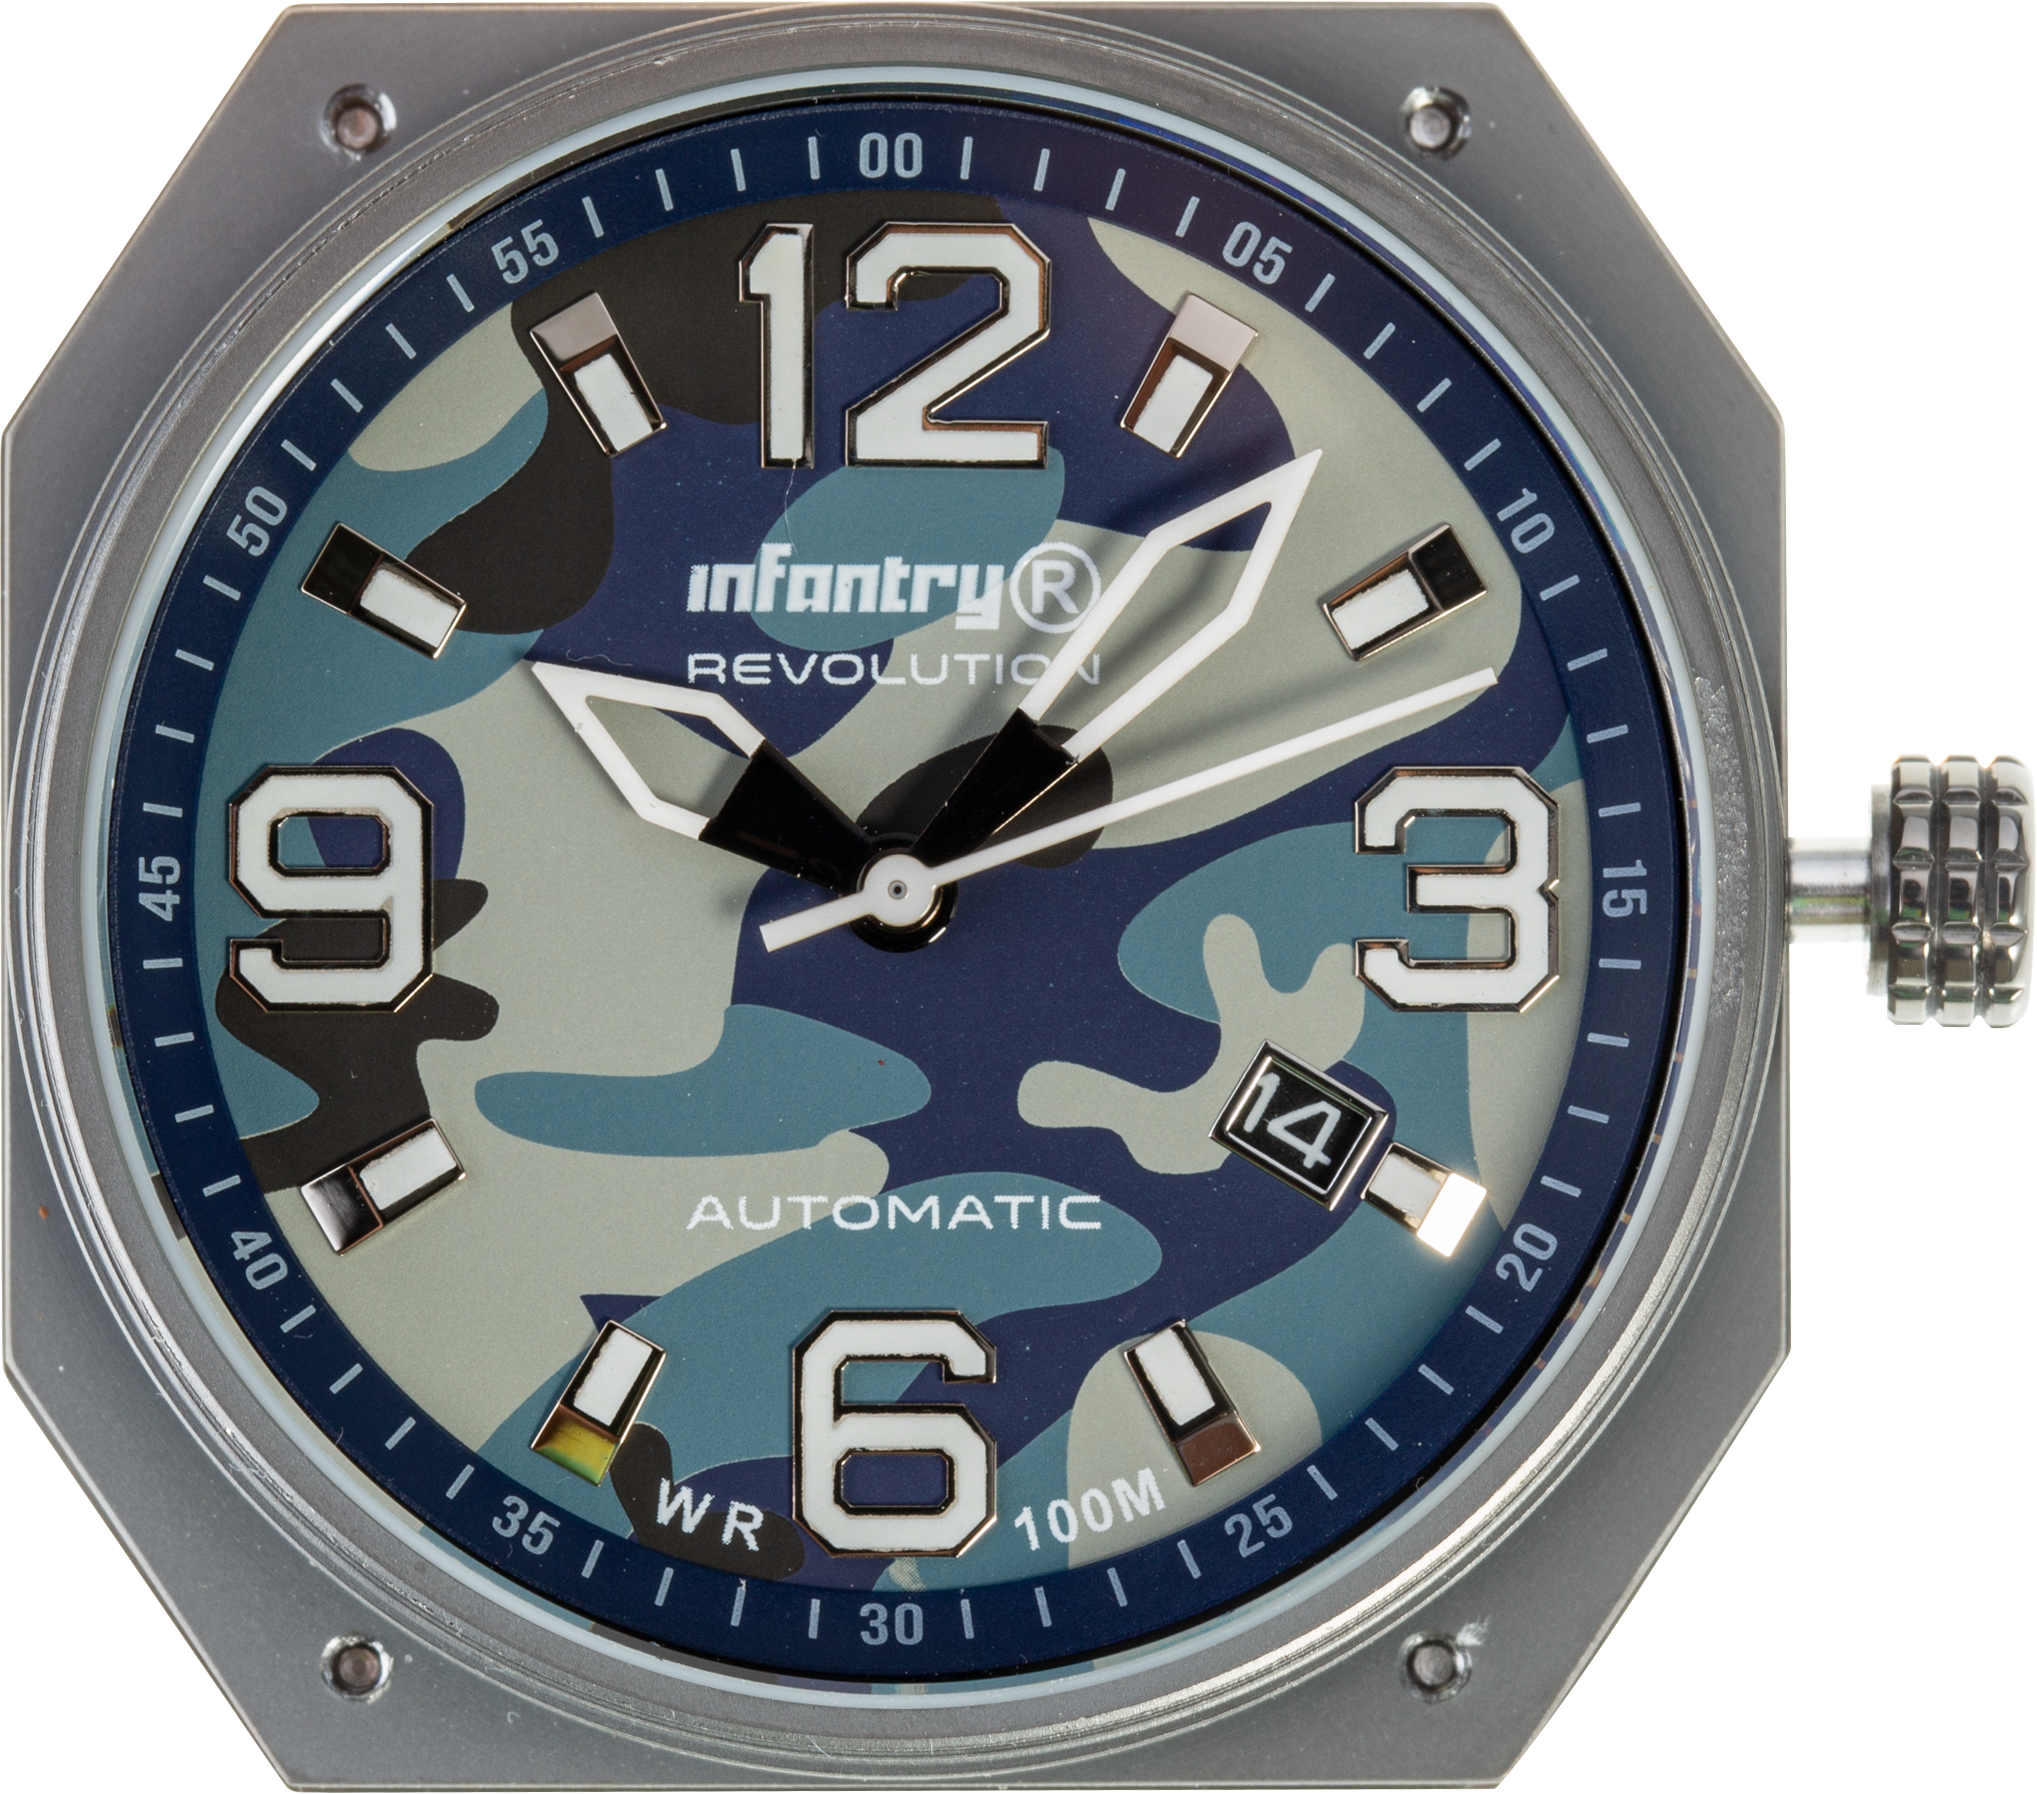 MOD 47 - watch movement - Blue camouflage